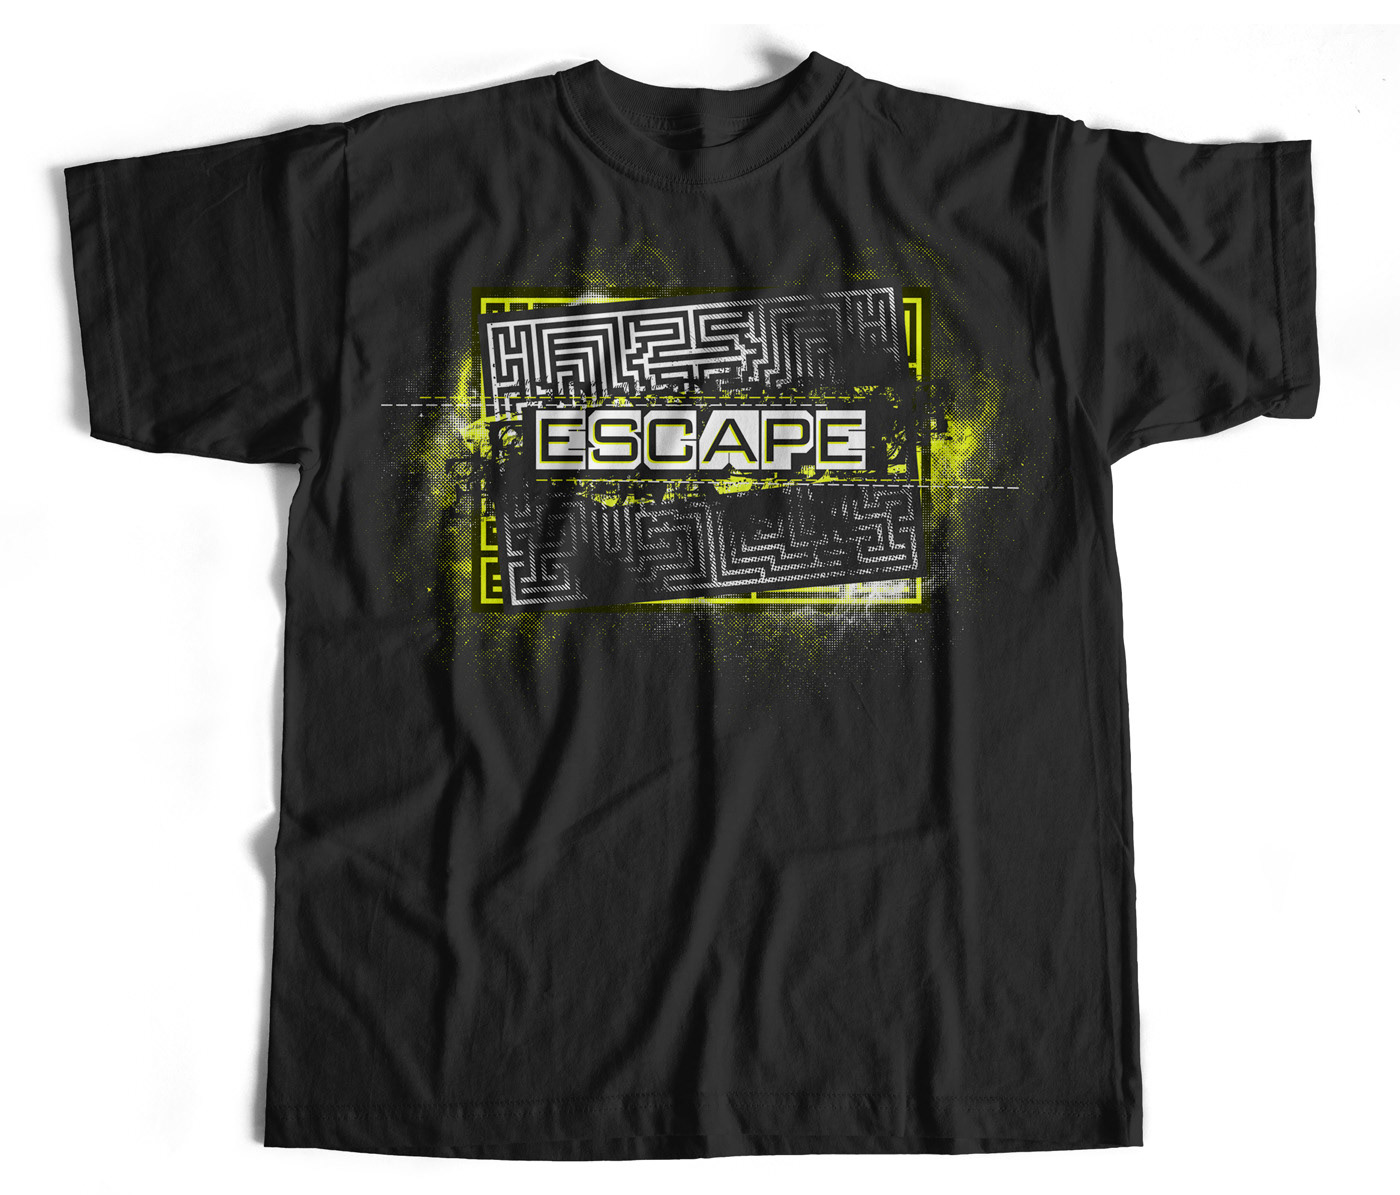 apparel Apparel Design shirt design tee shirt Tshirt Design